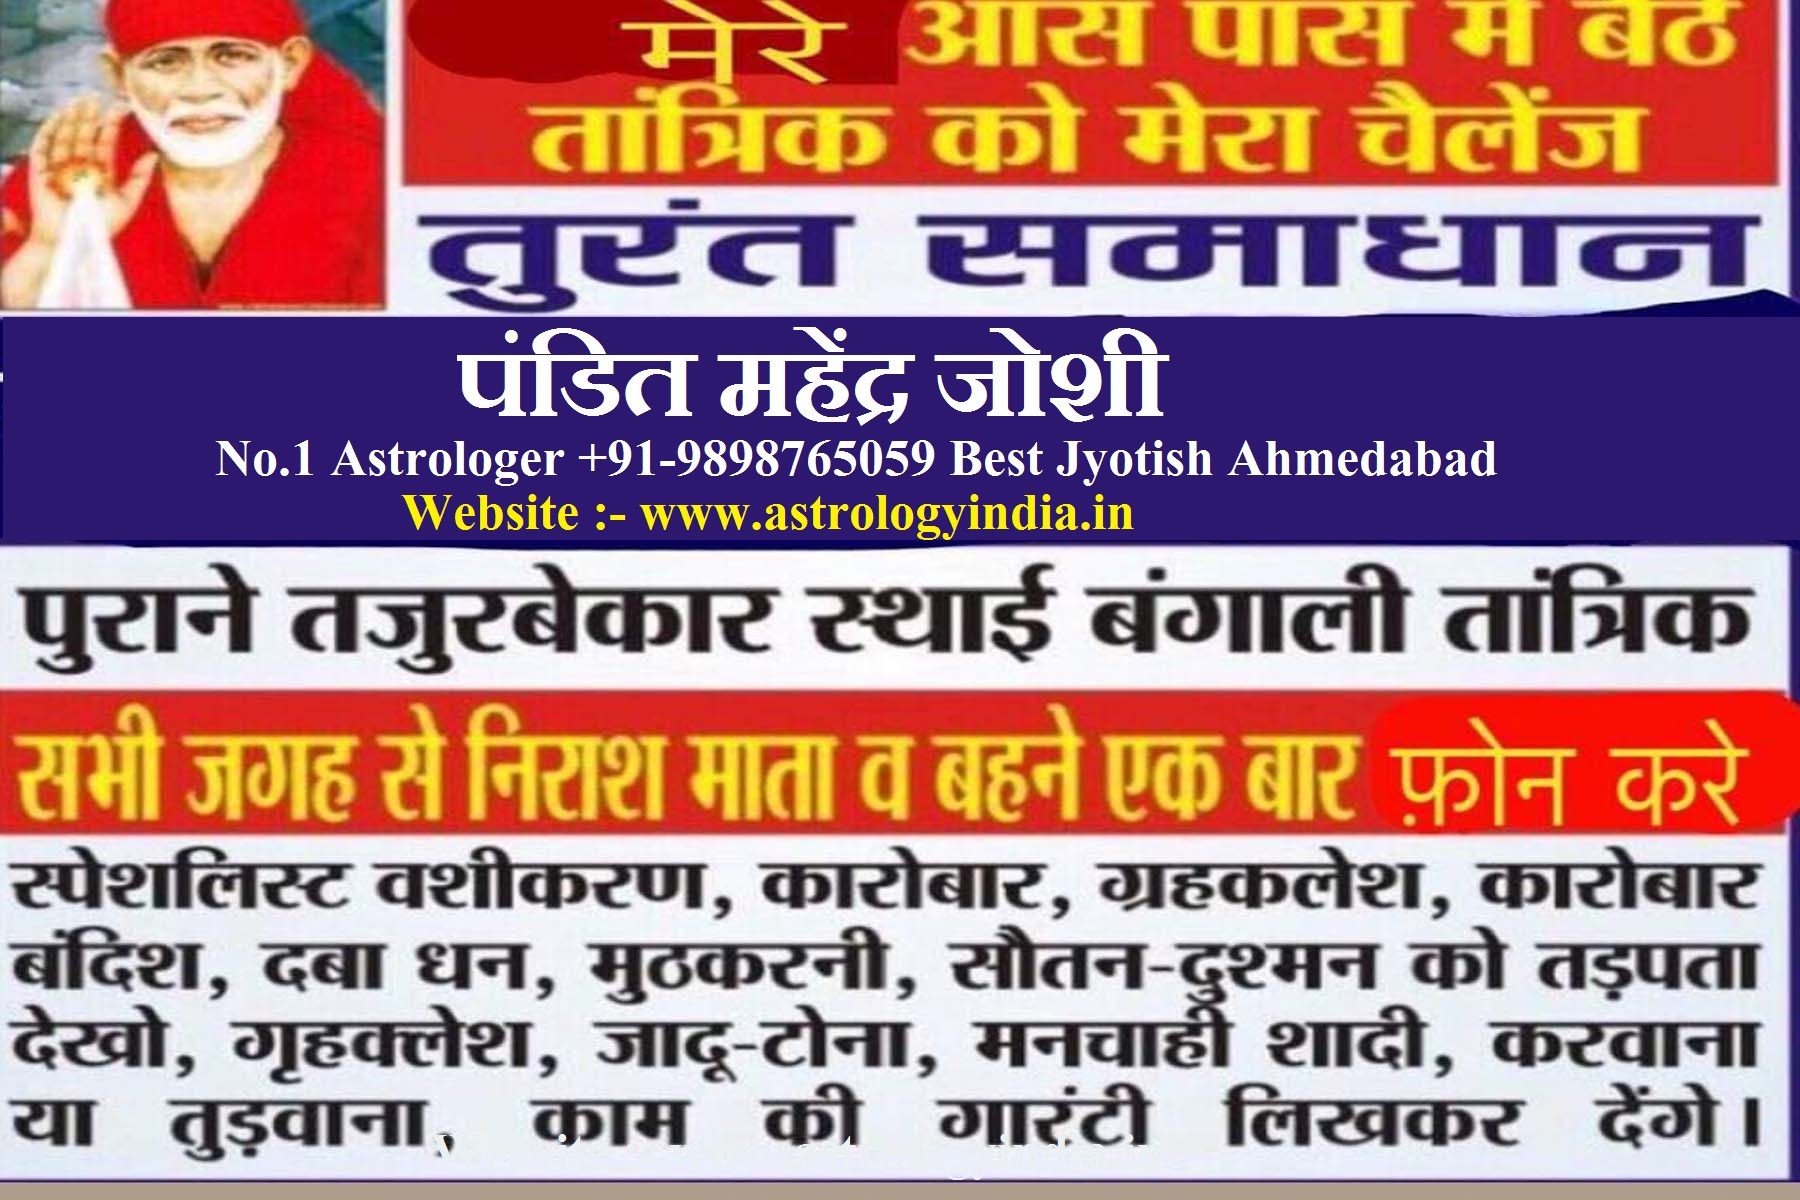 No.1 Astrologer +91-9898765059 Best Jyotish Ahmedabad Astrologer Mahendra JoshiServicesAstrology - NumerologyAll Indiaother